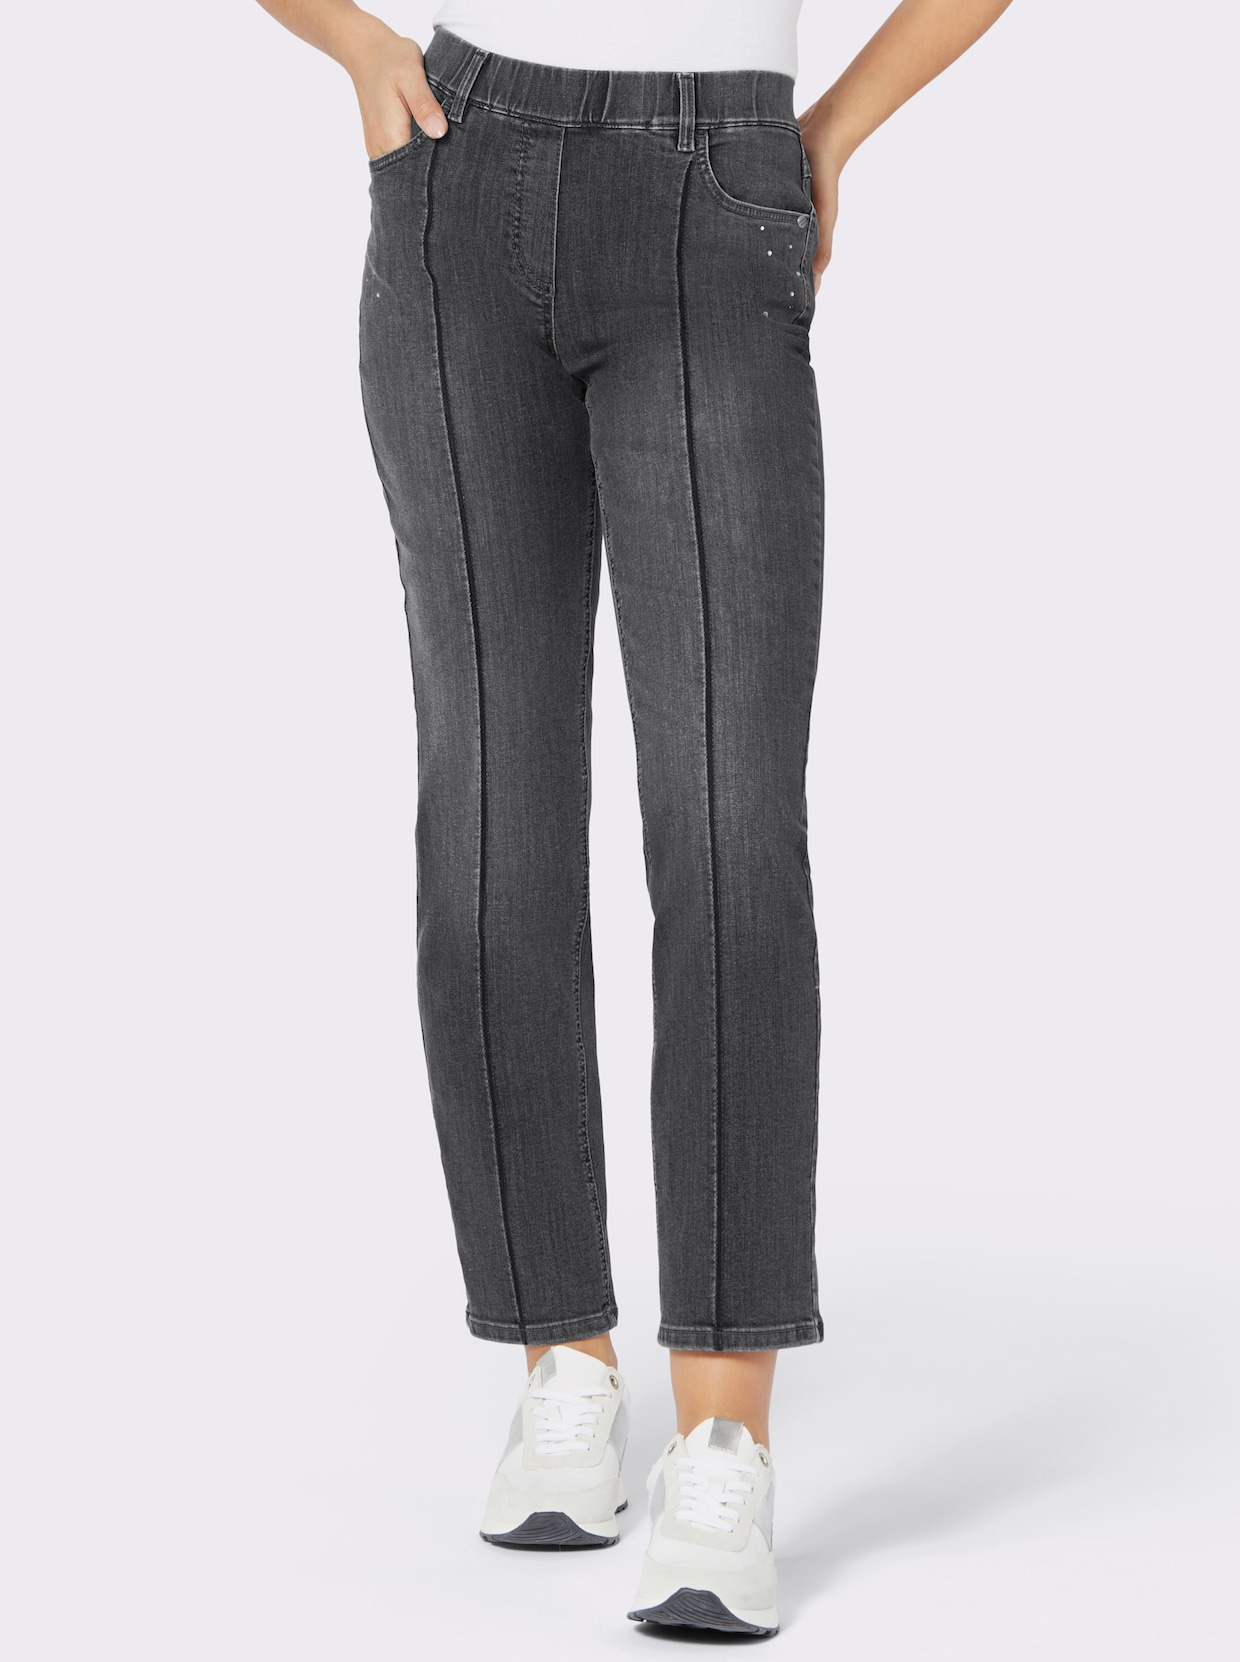 Ascari Edel-Jeans - grey denim